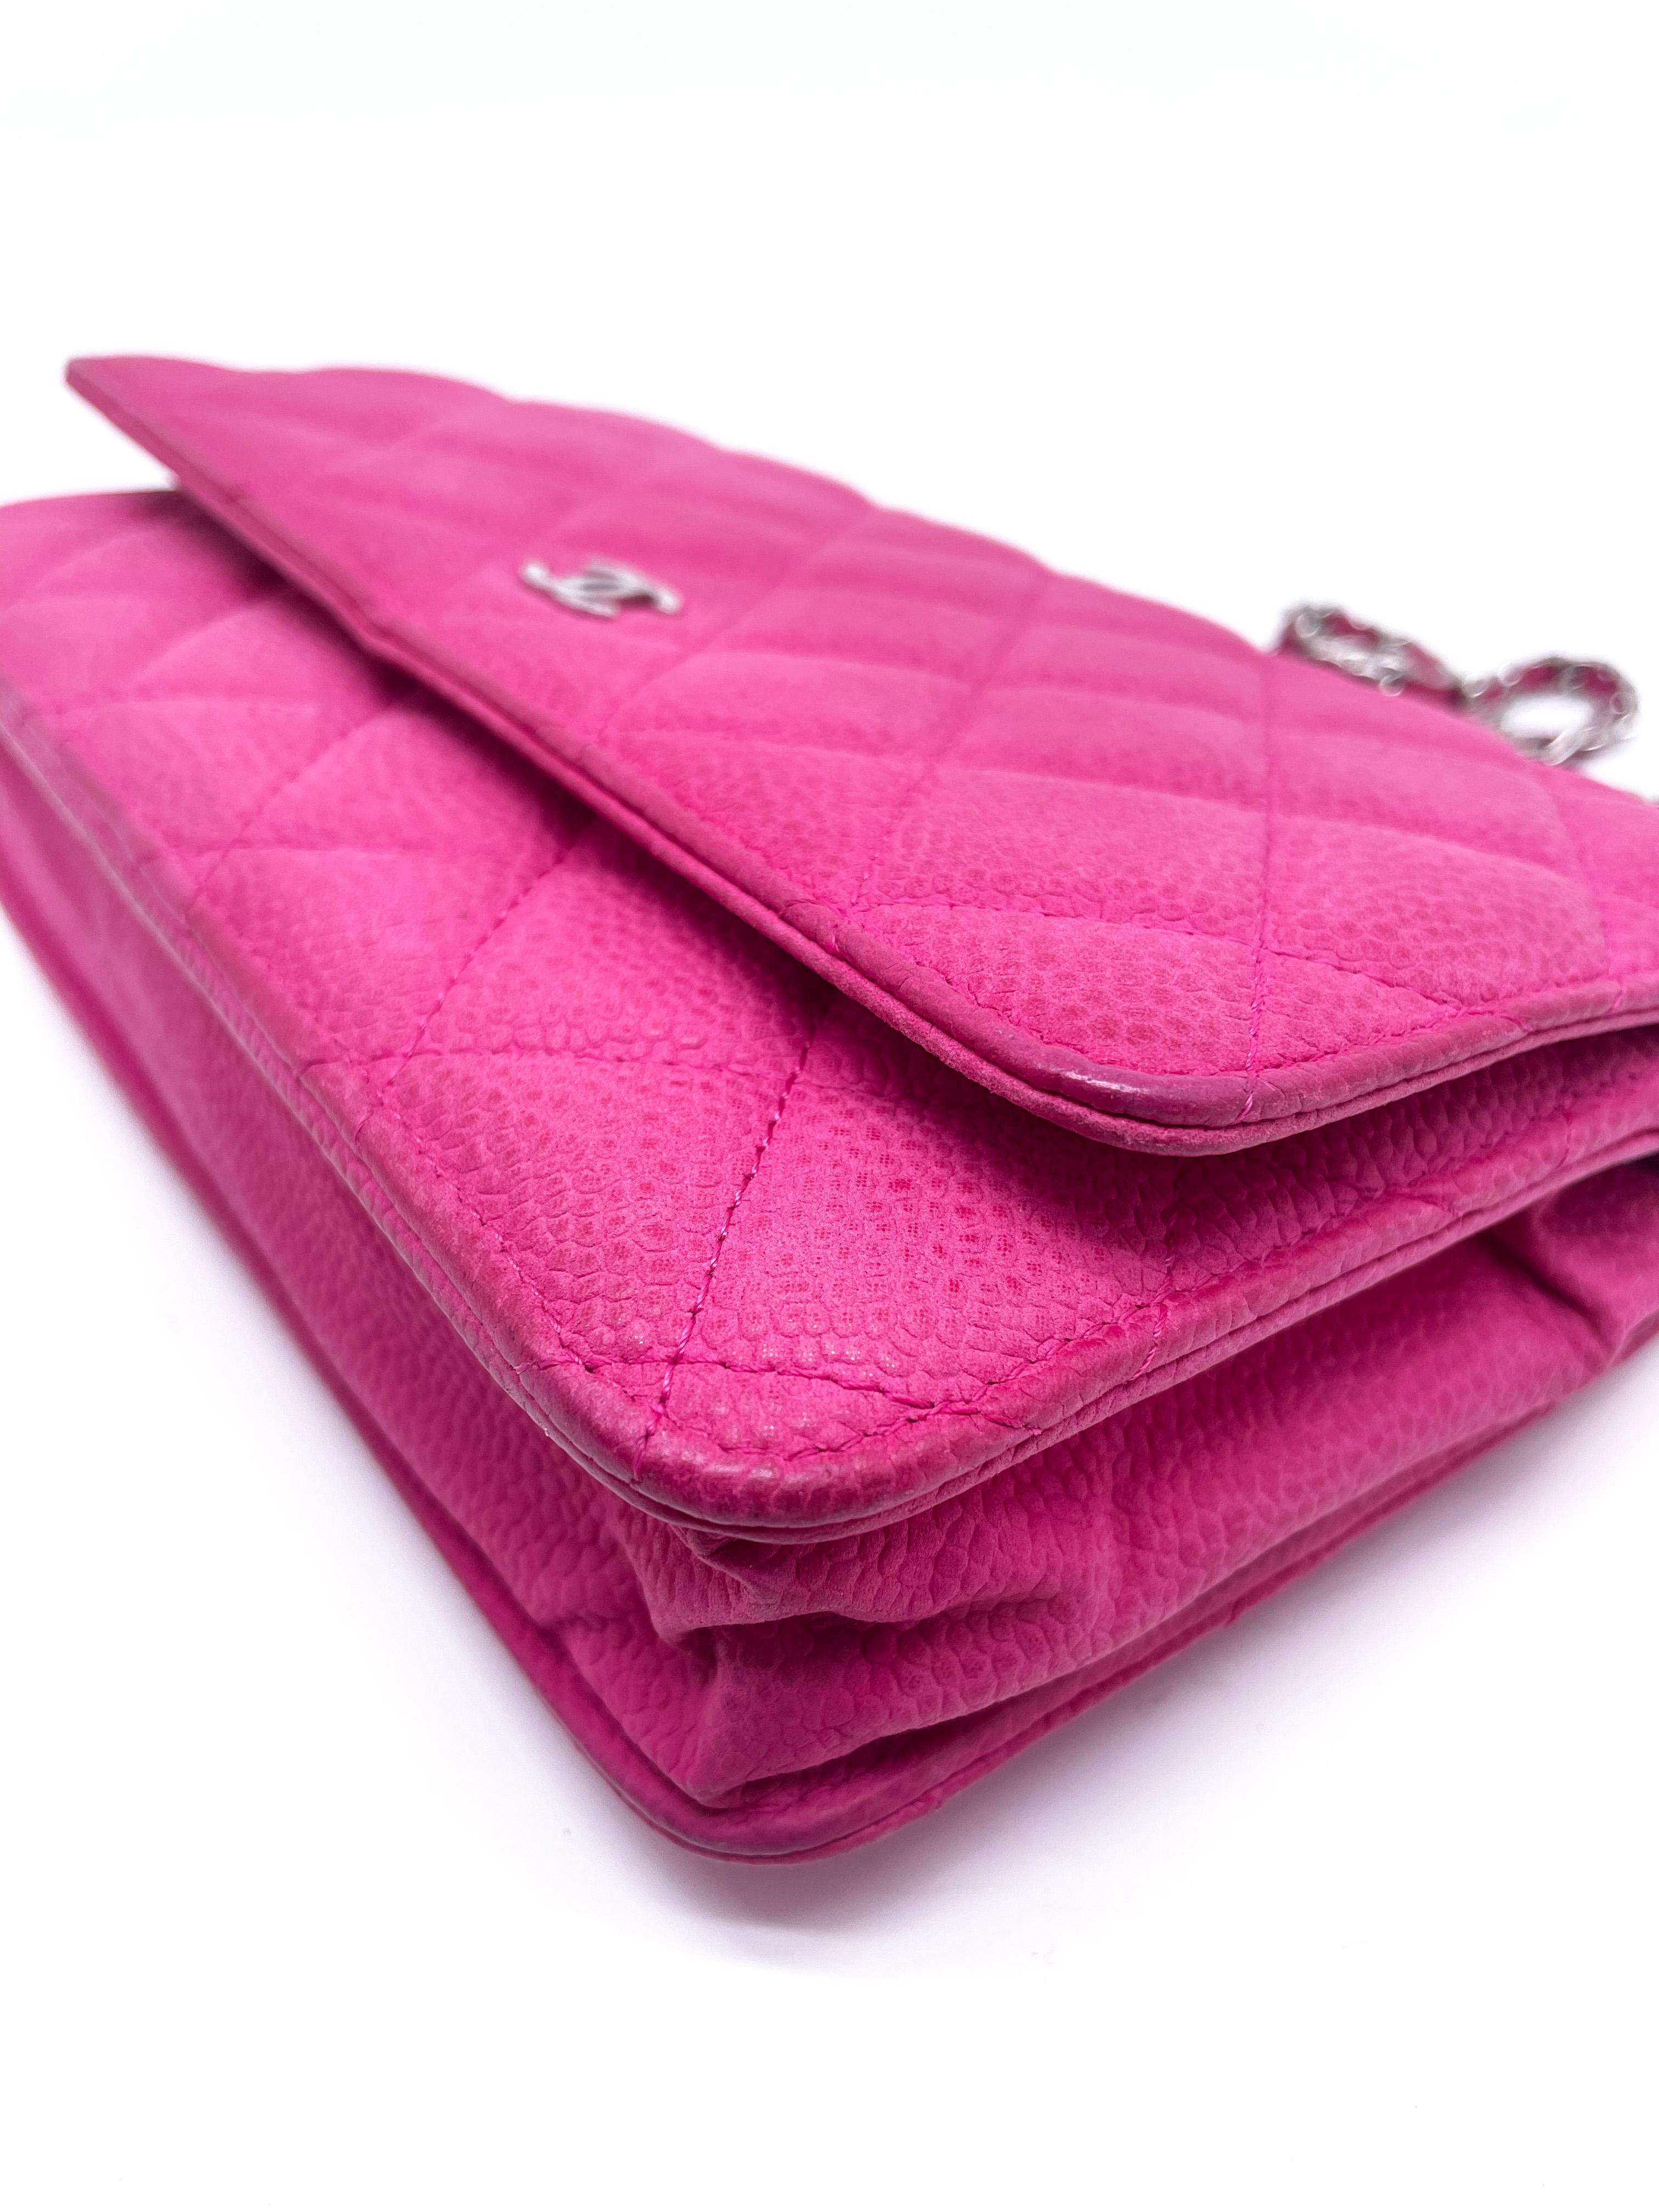 Chanel Wallet on Chain Handbag Pink Caviar Leather 4